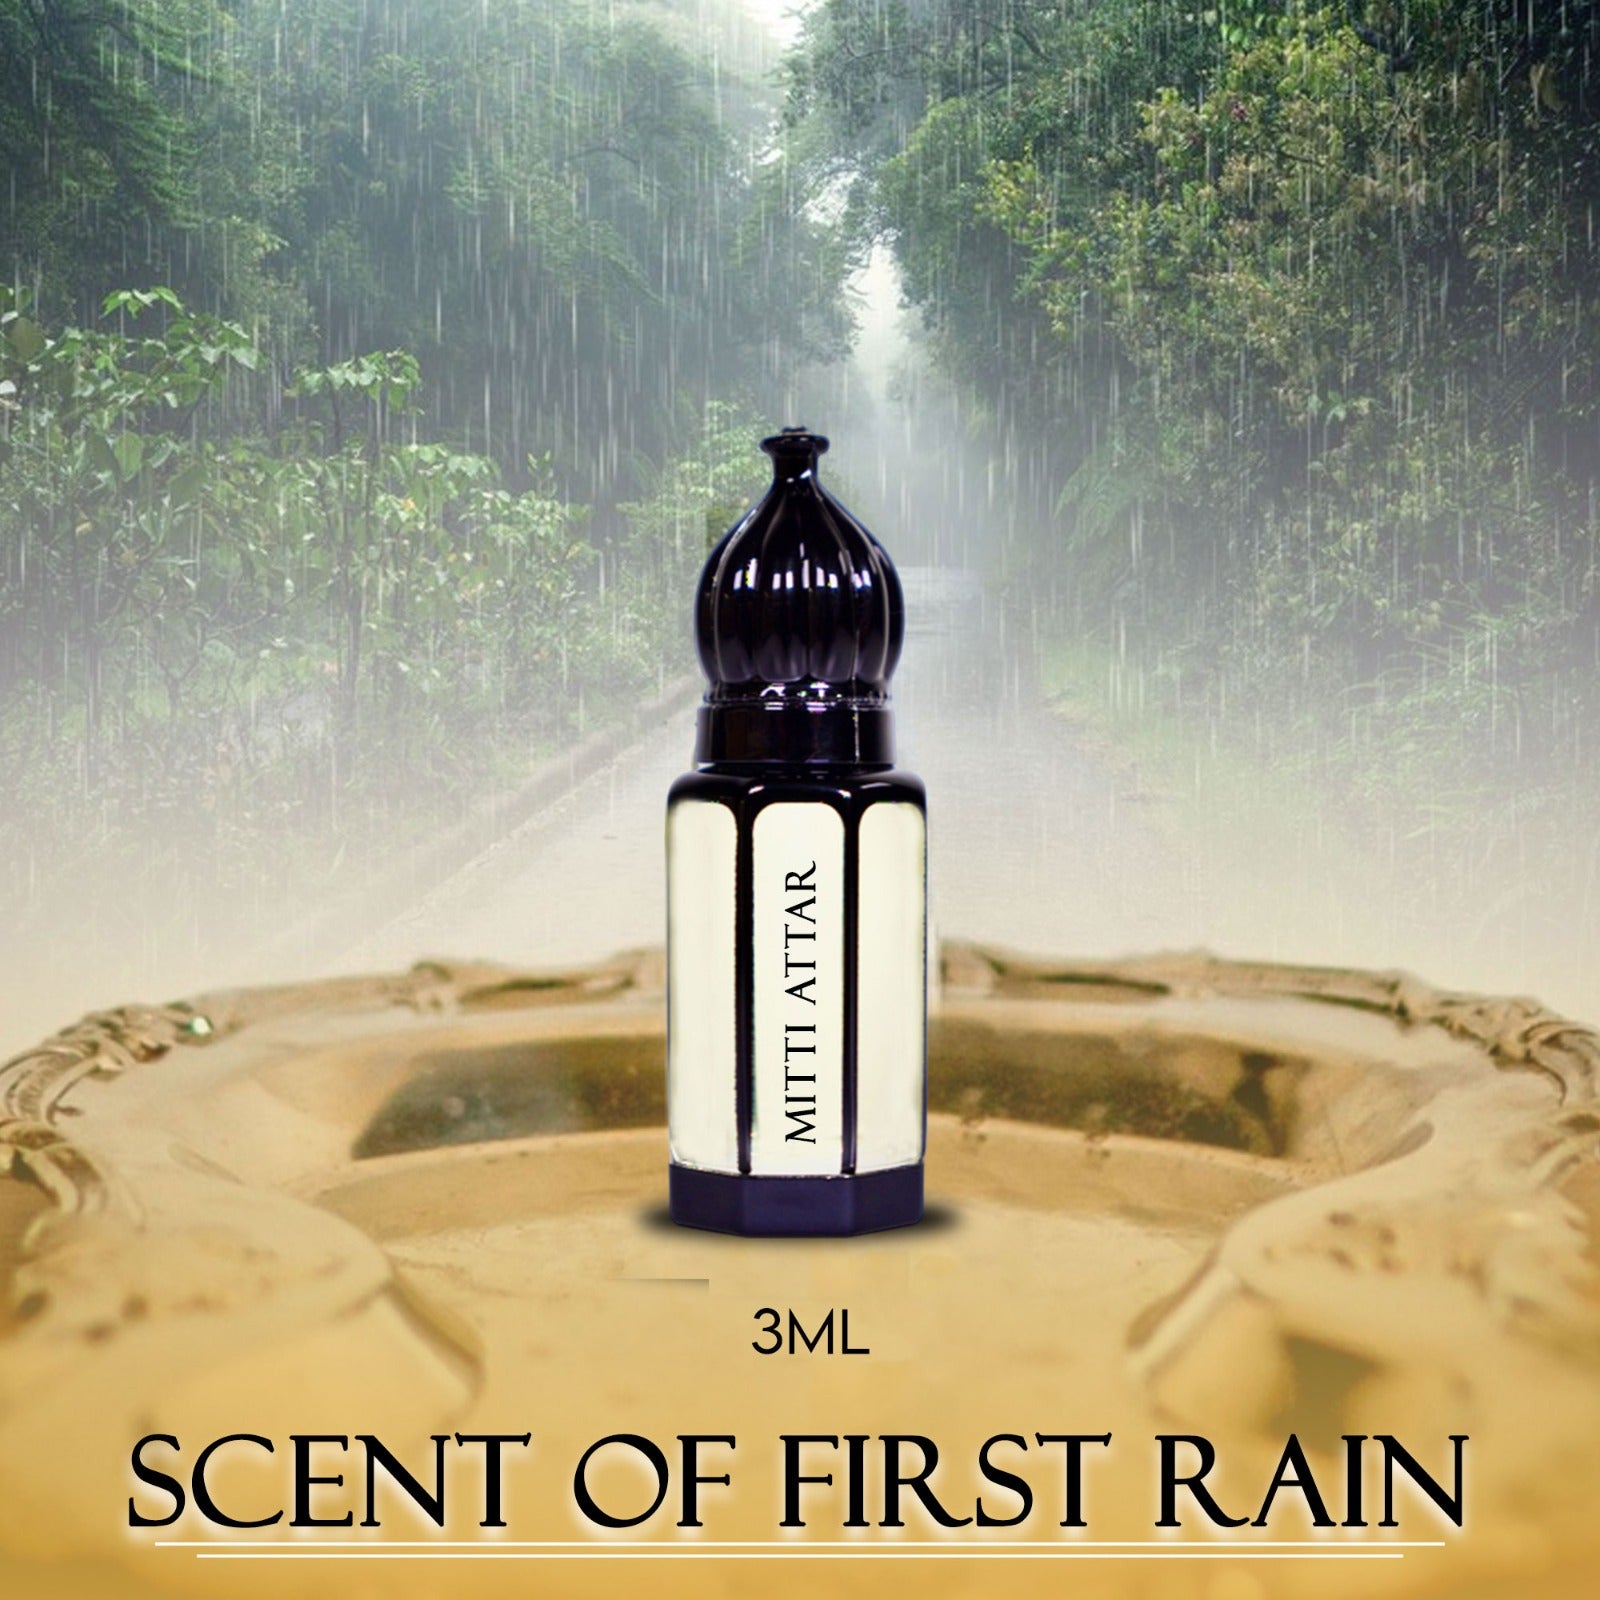 First Rain Mitti Perfume 